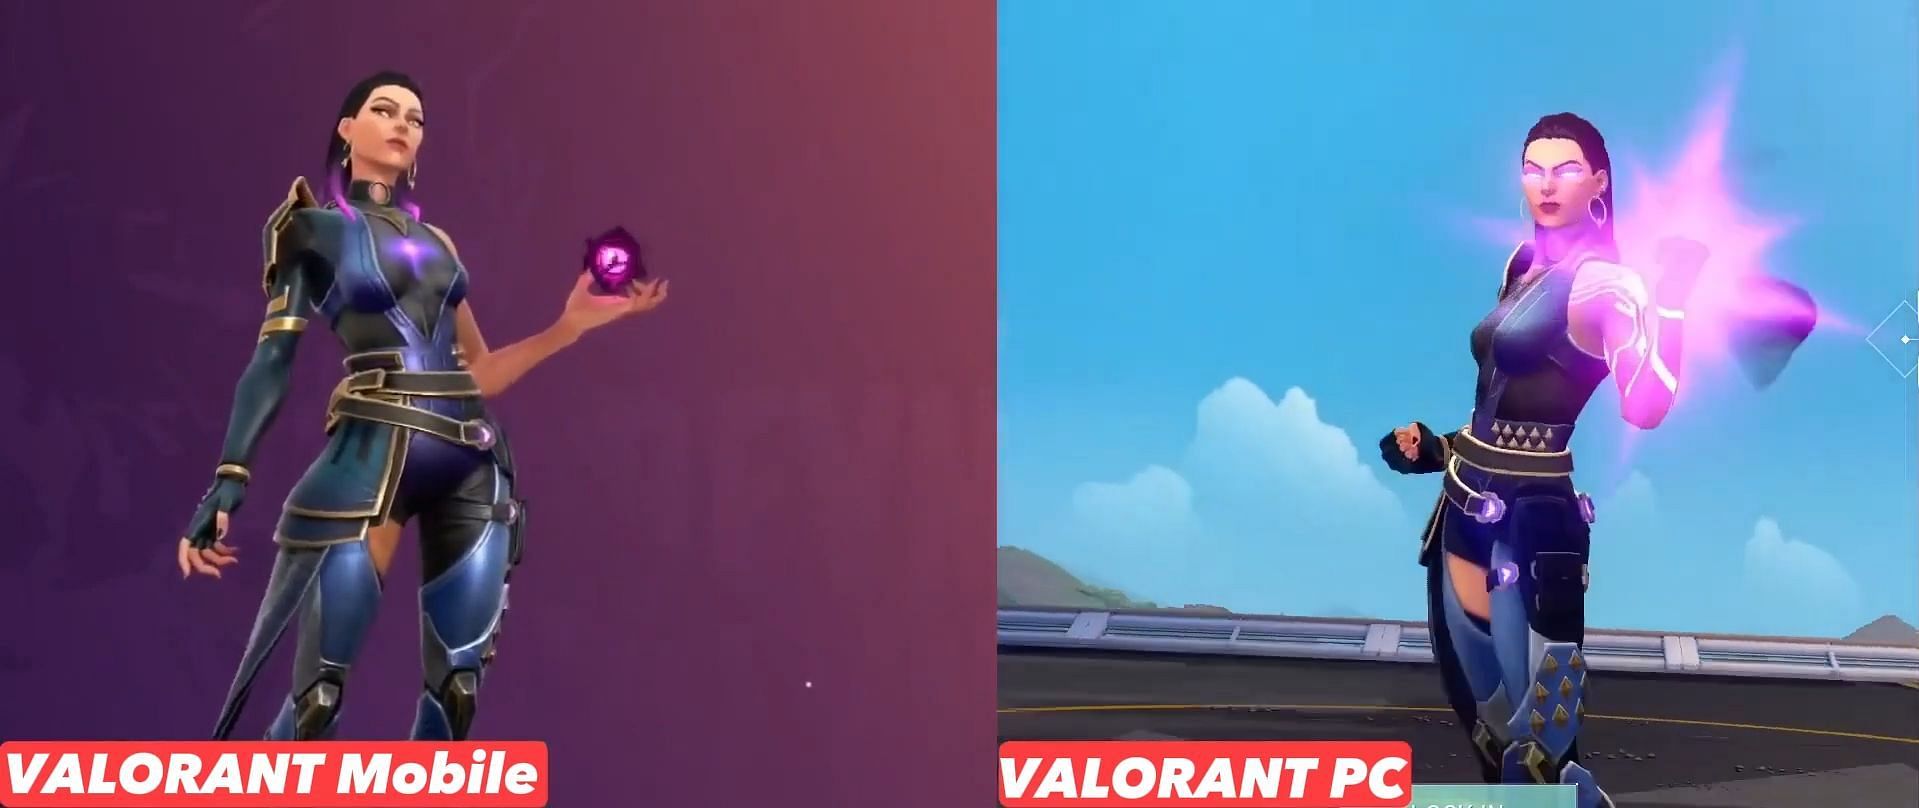 Reyna in Valorant mobile and Valorant PC (Image via Riot Games)